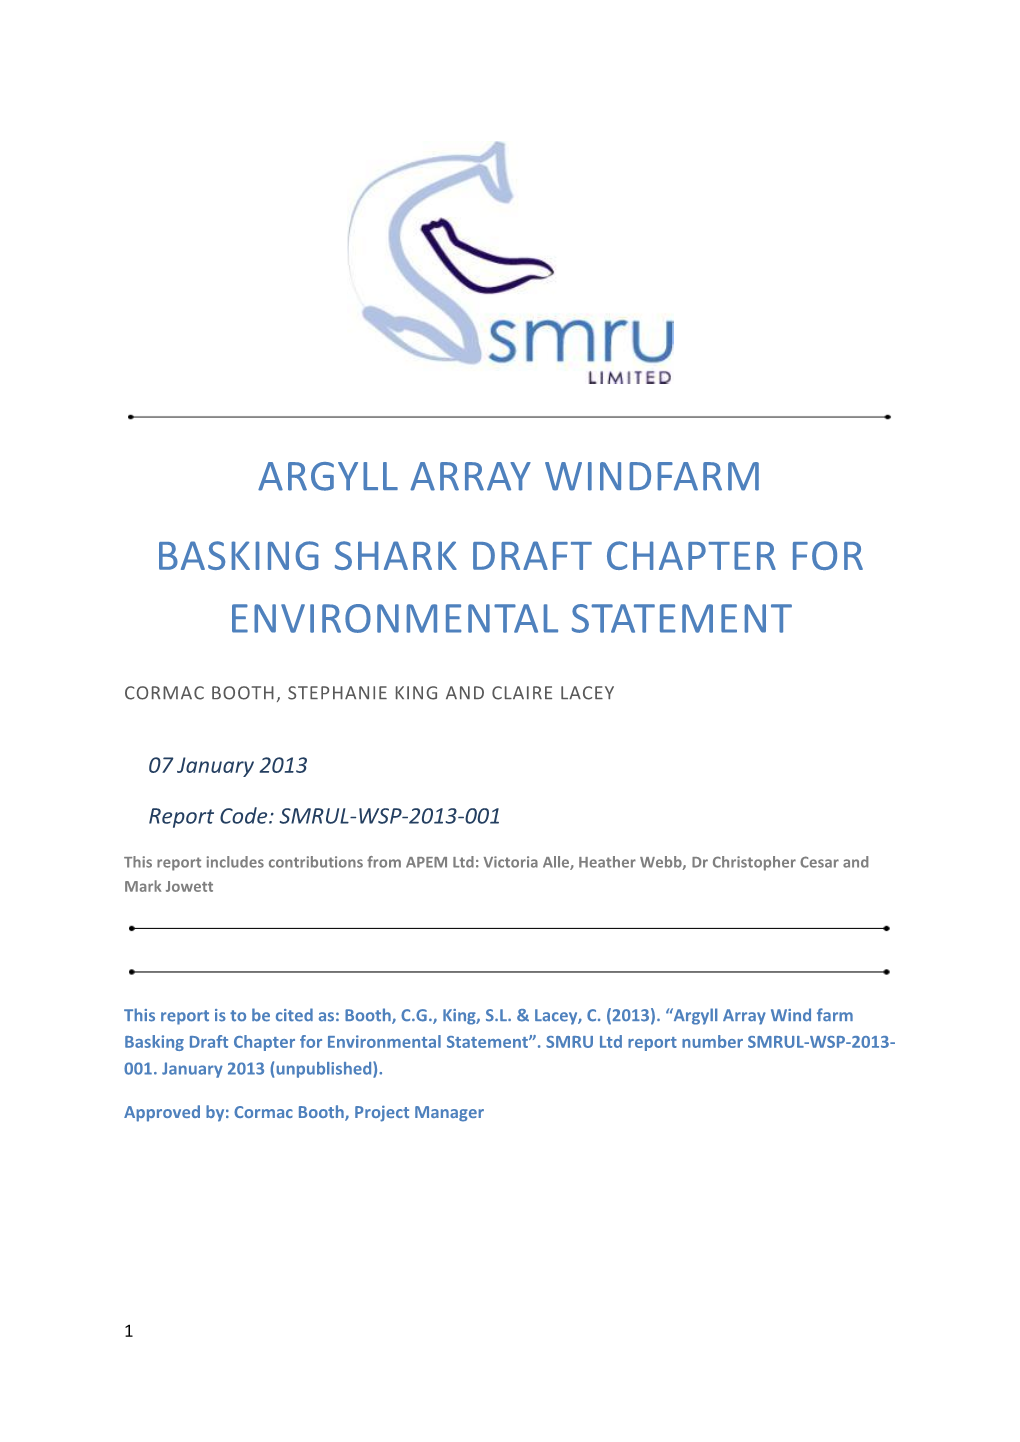 Argyll Array Windfarm Basking Shark Draft Chapter for Environmental Statement